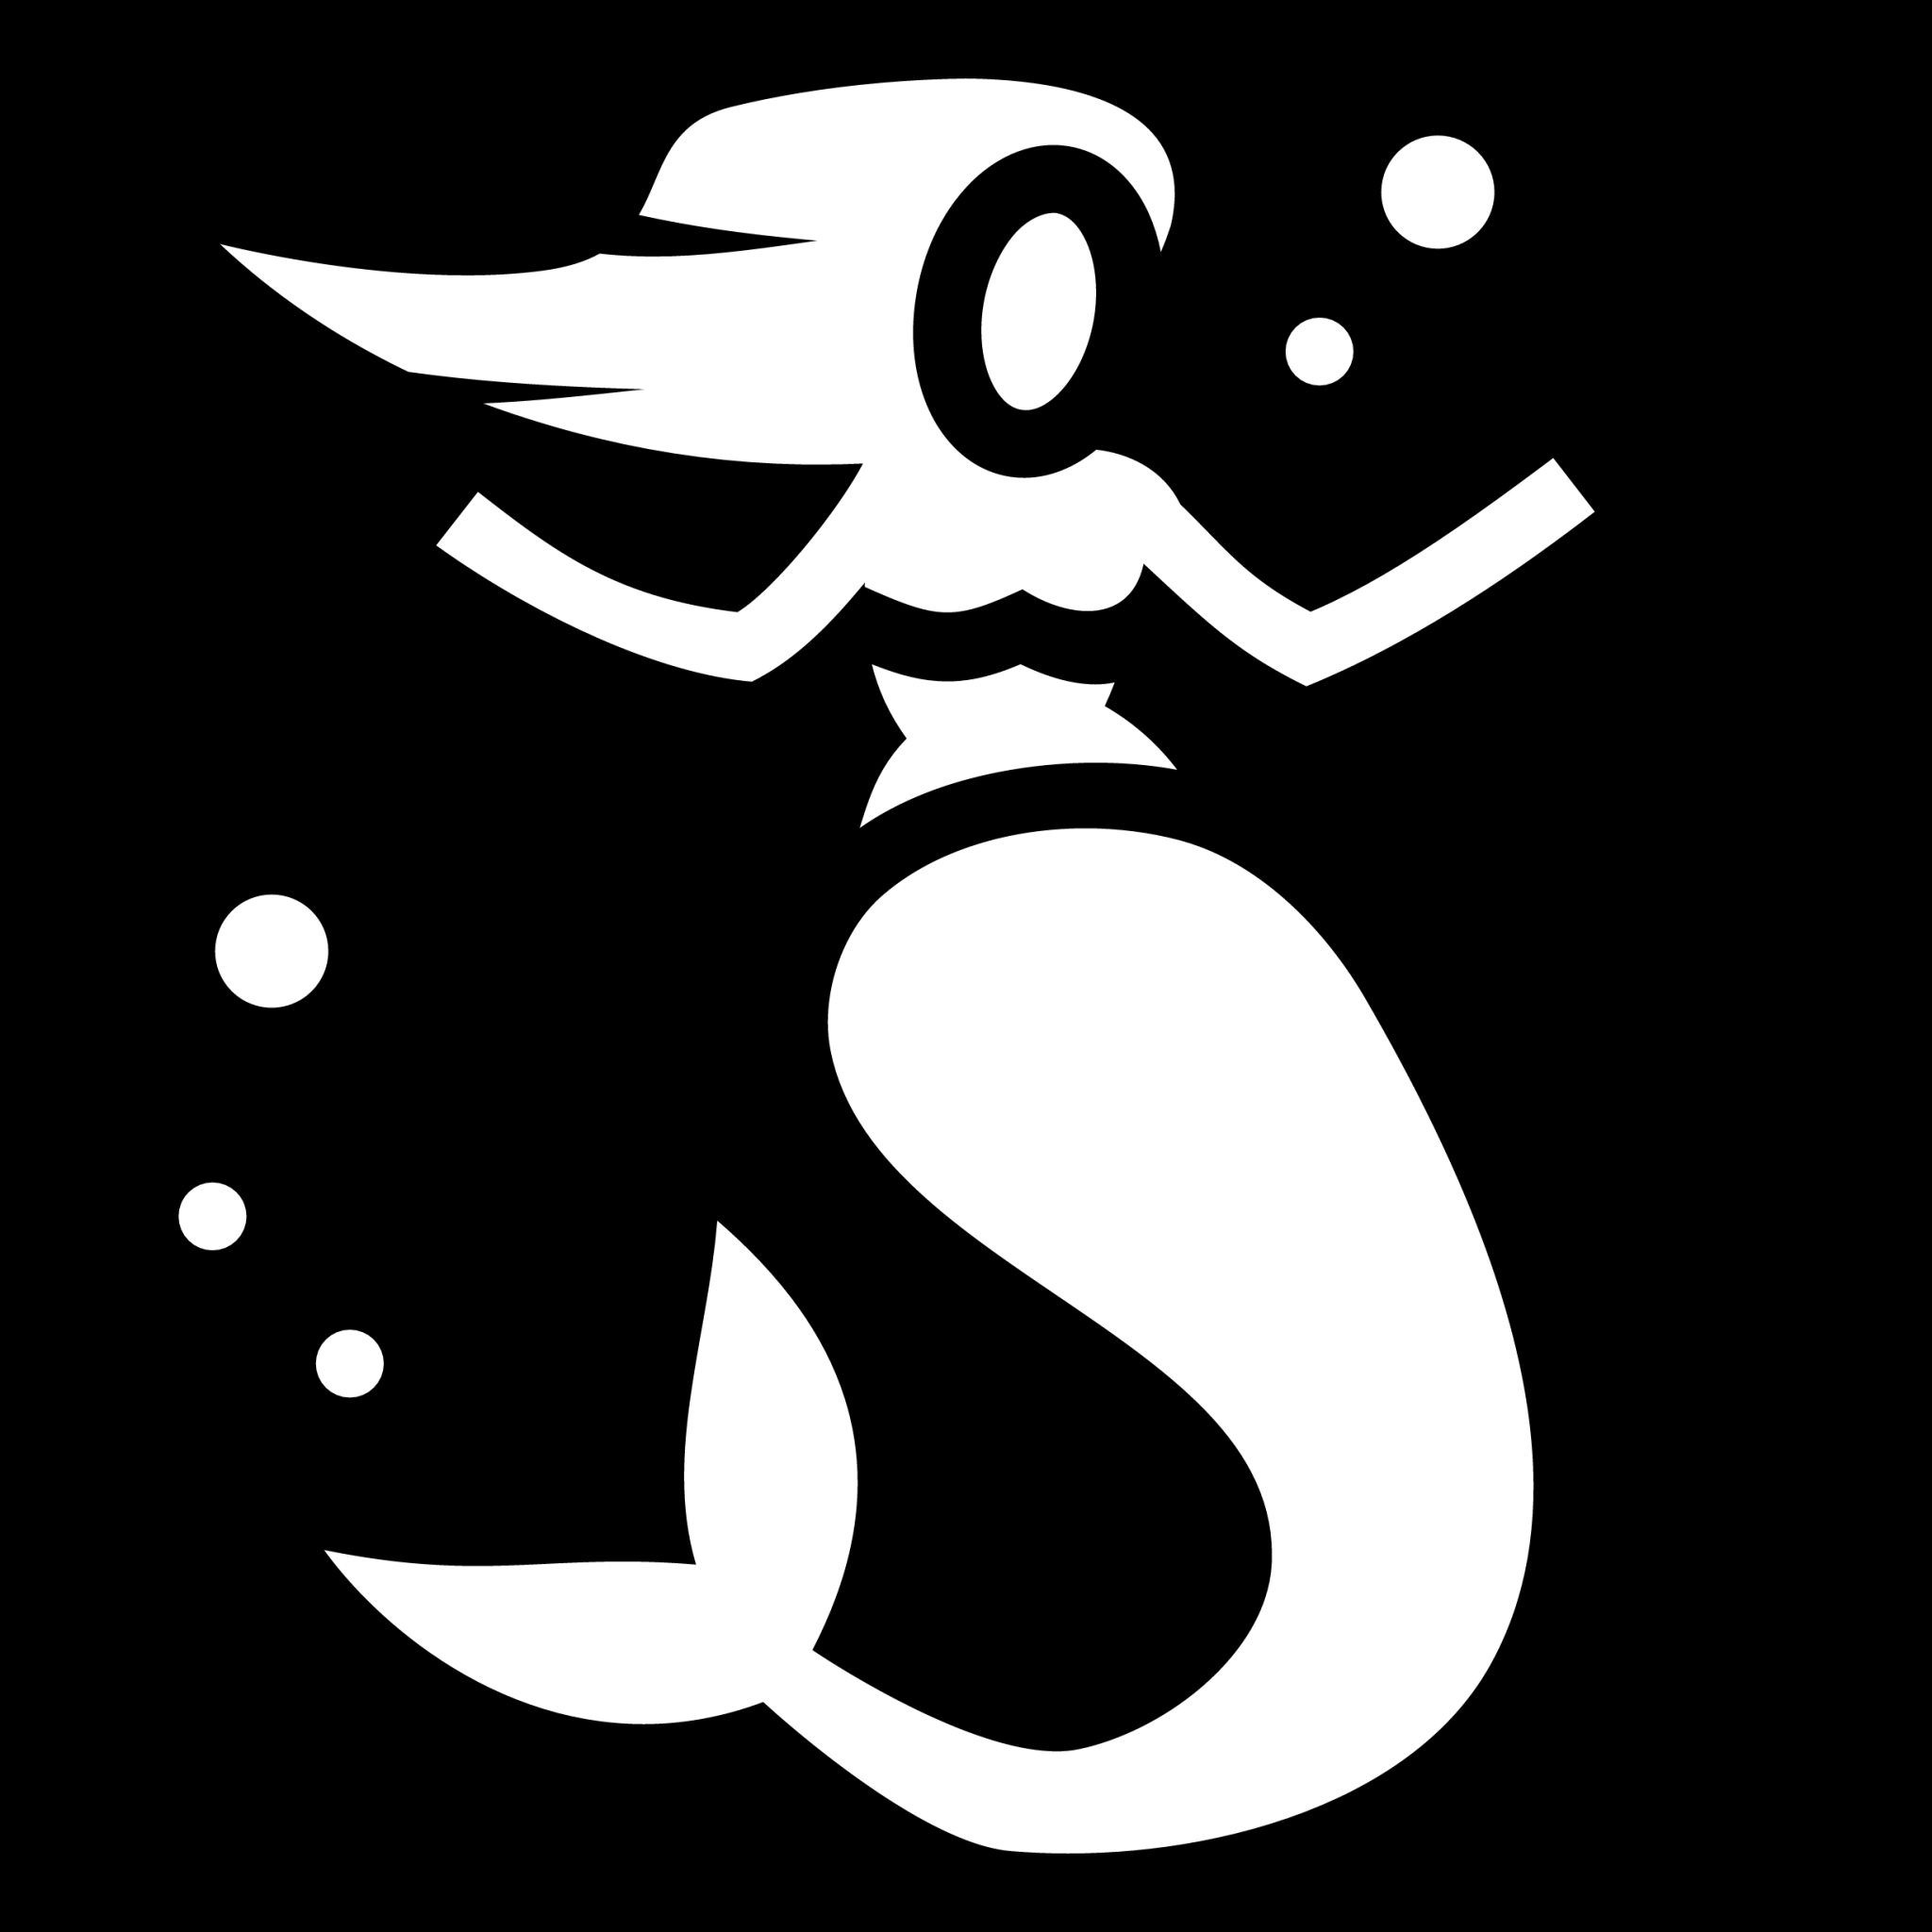 mermaid icon